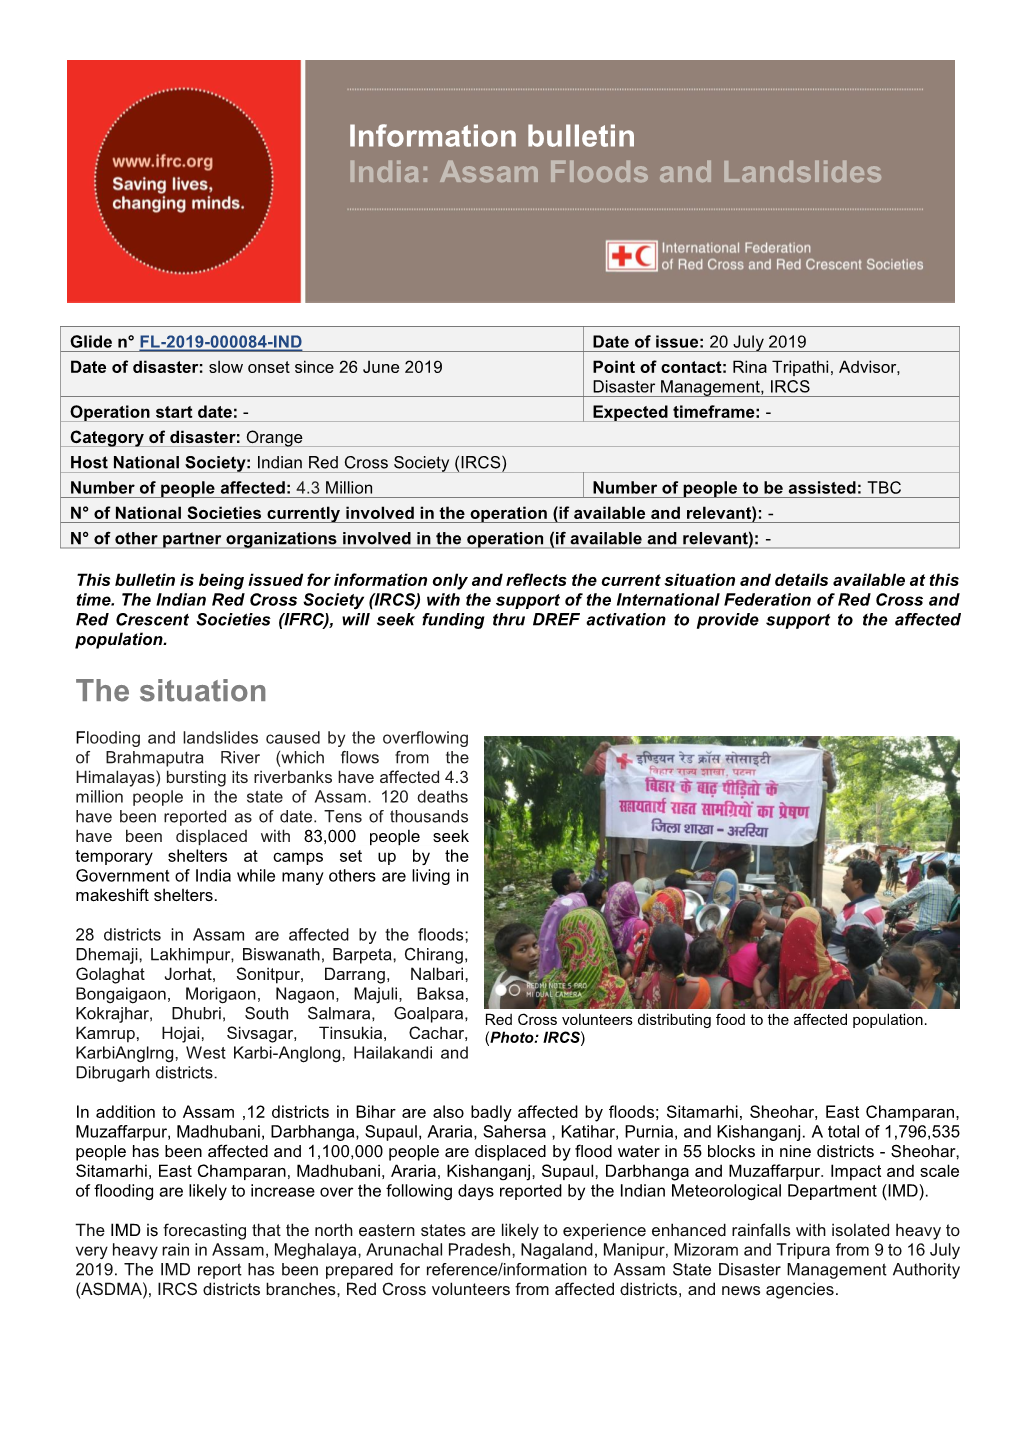 The Situation Information Bulletin India: Assam Floods and Landslides